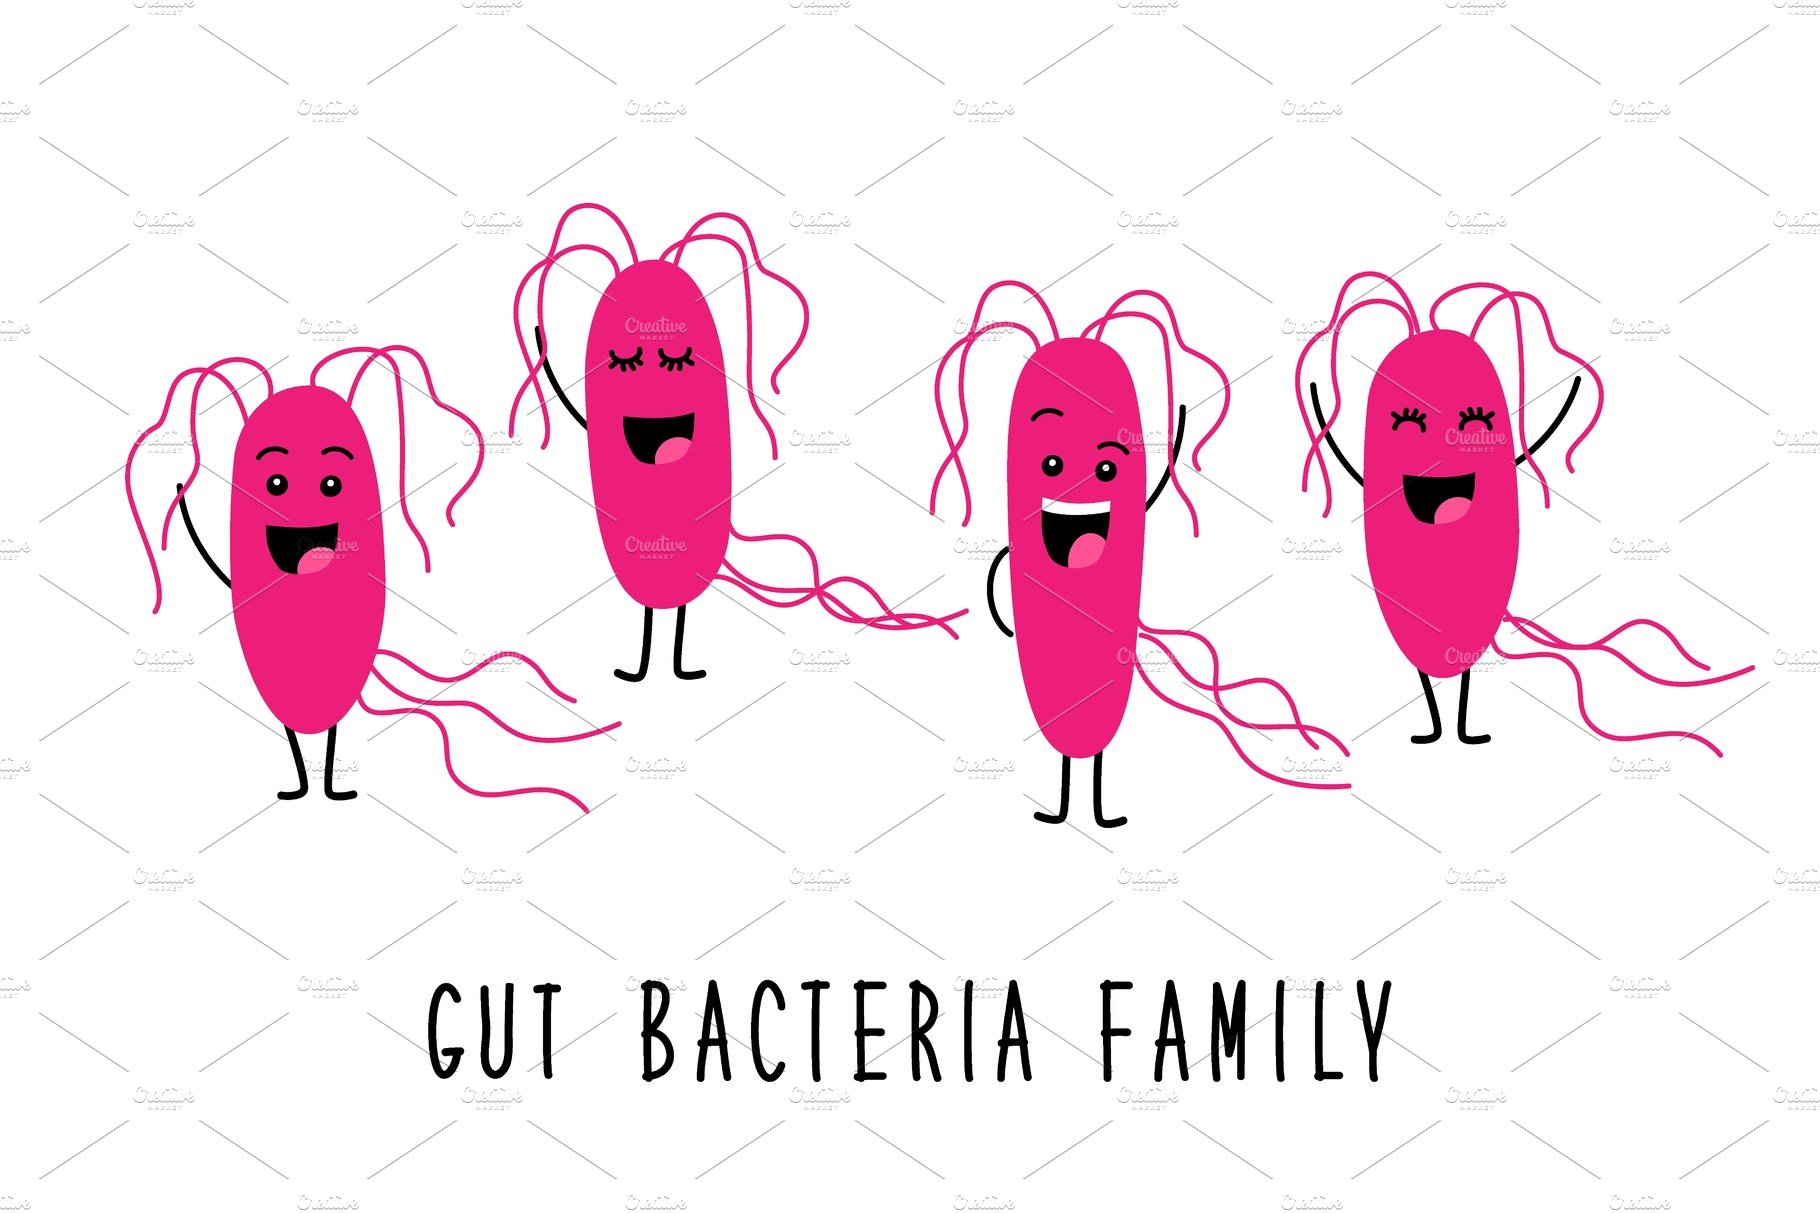 Funny gut bacteria family cartoon cover image.